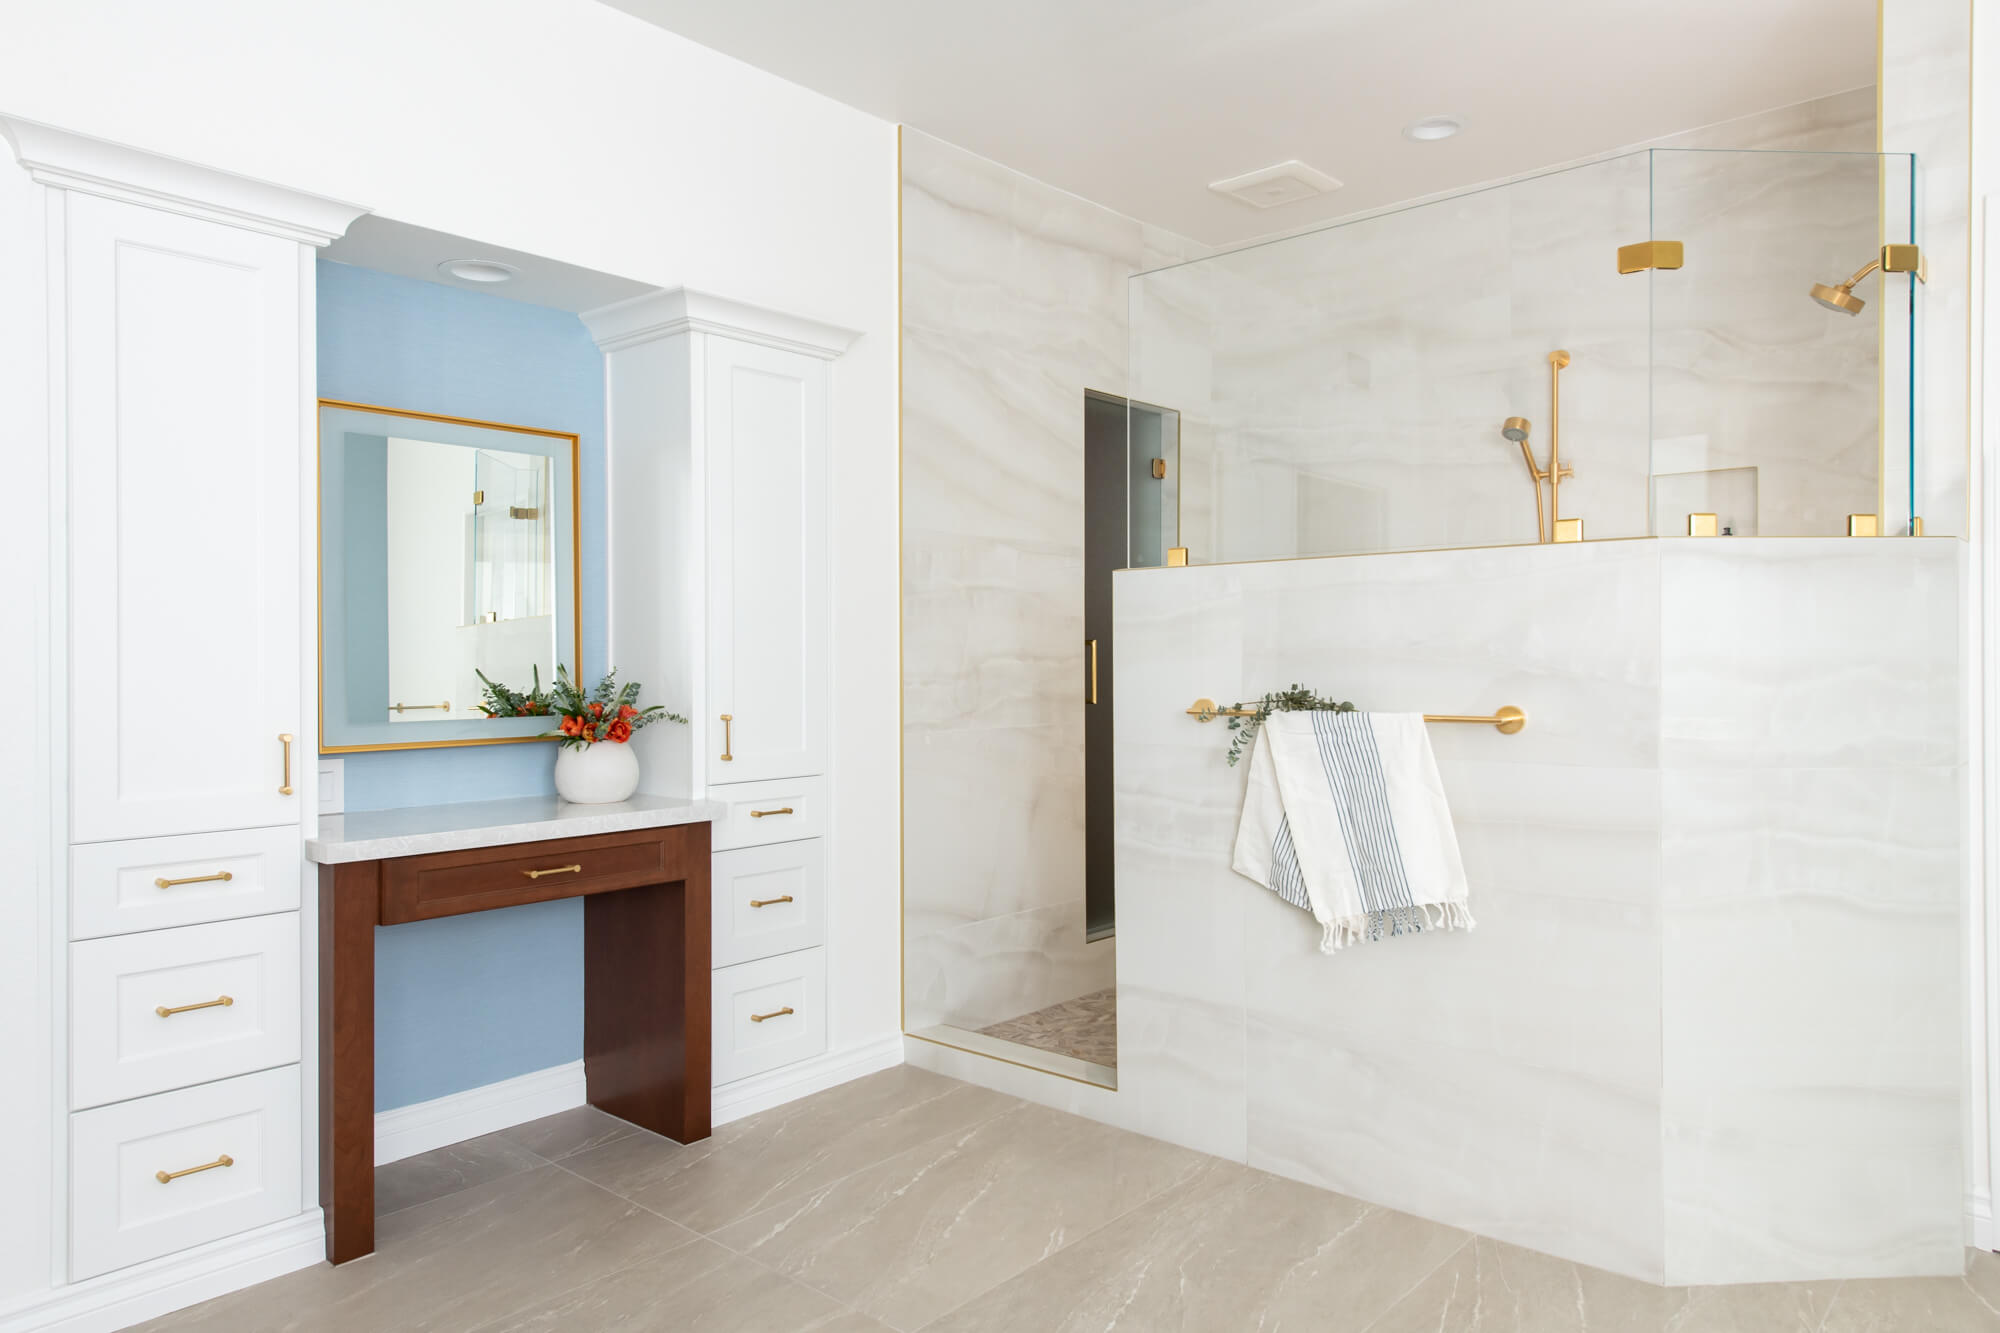 Built-in-makeup-vanity-in-bathroom-remodel - bring color into your bathroom